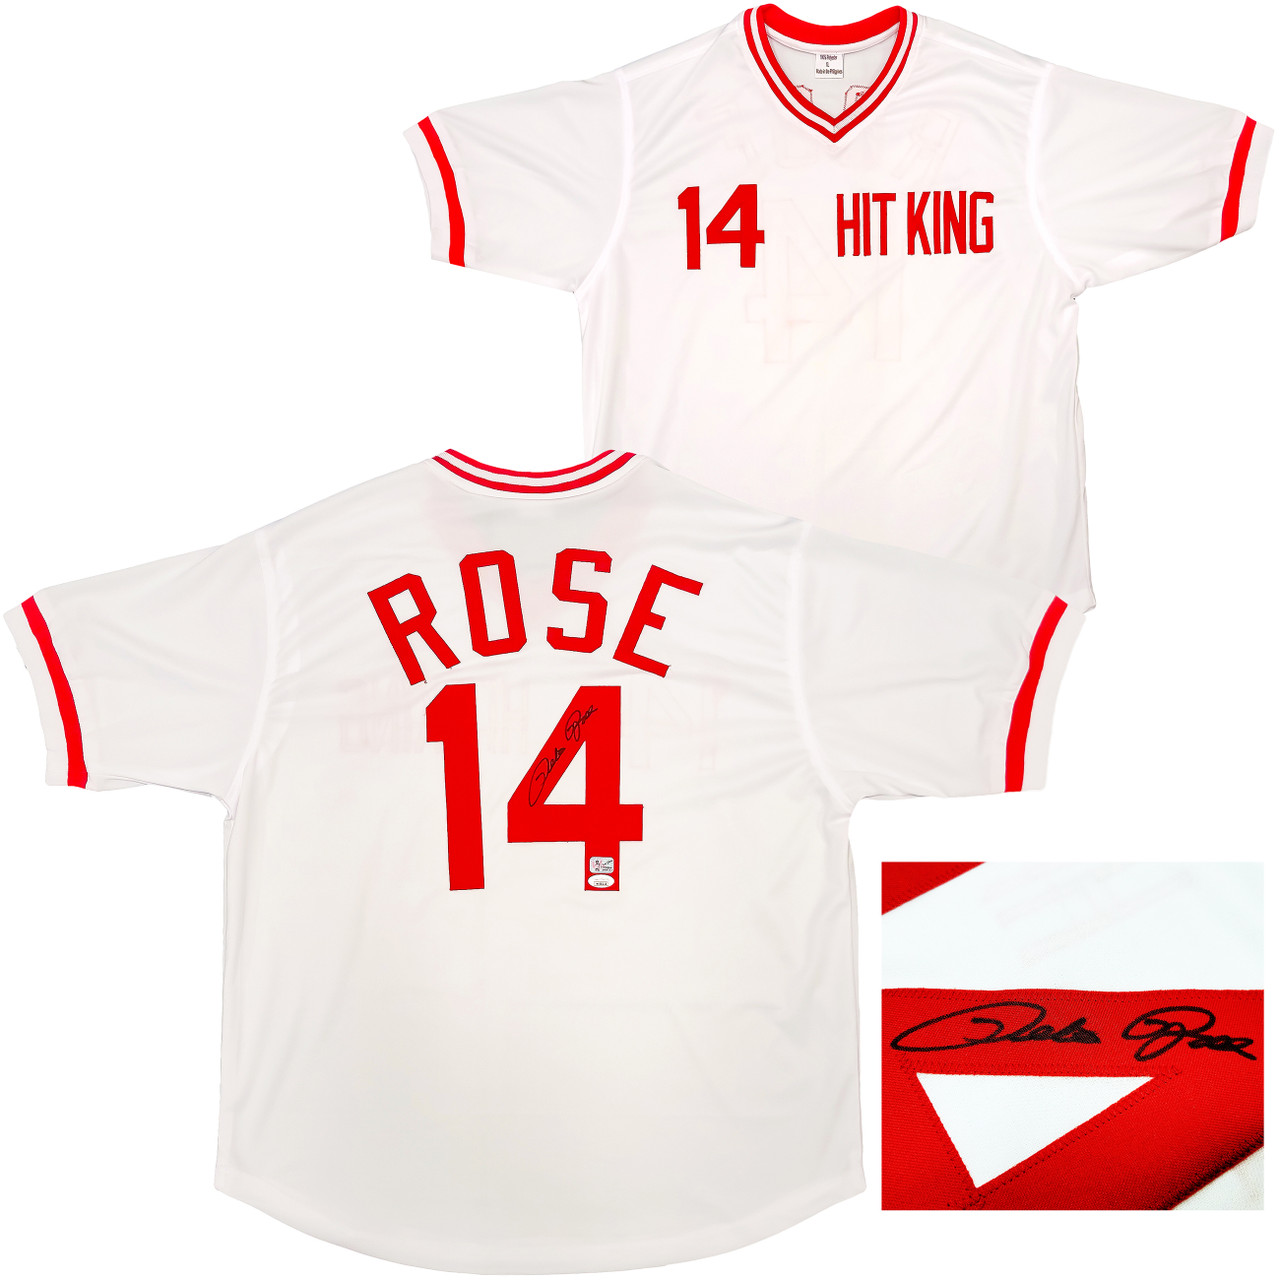 Pete Rose (Reds) Hit King Autographed OMLB Baseball